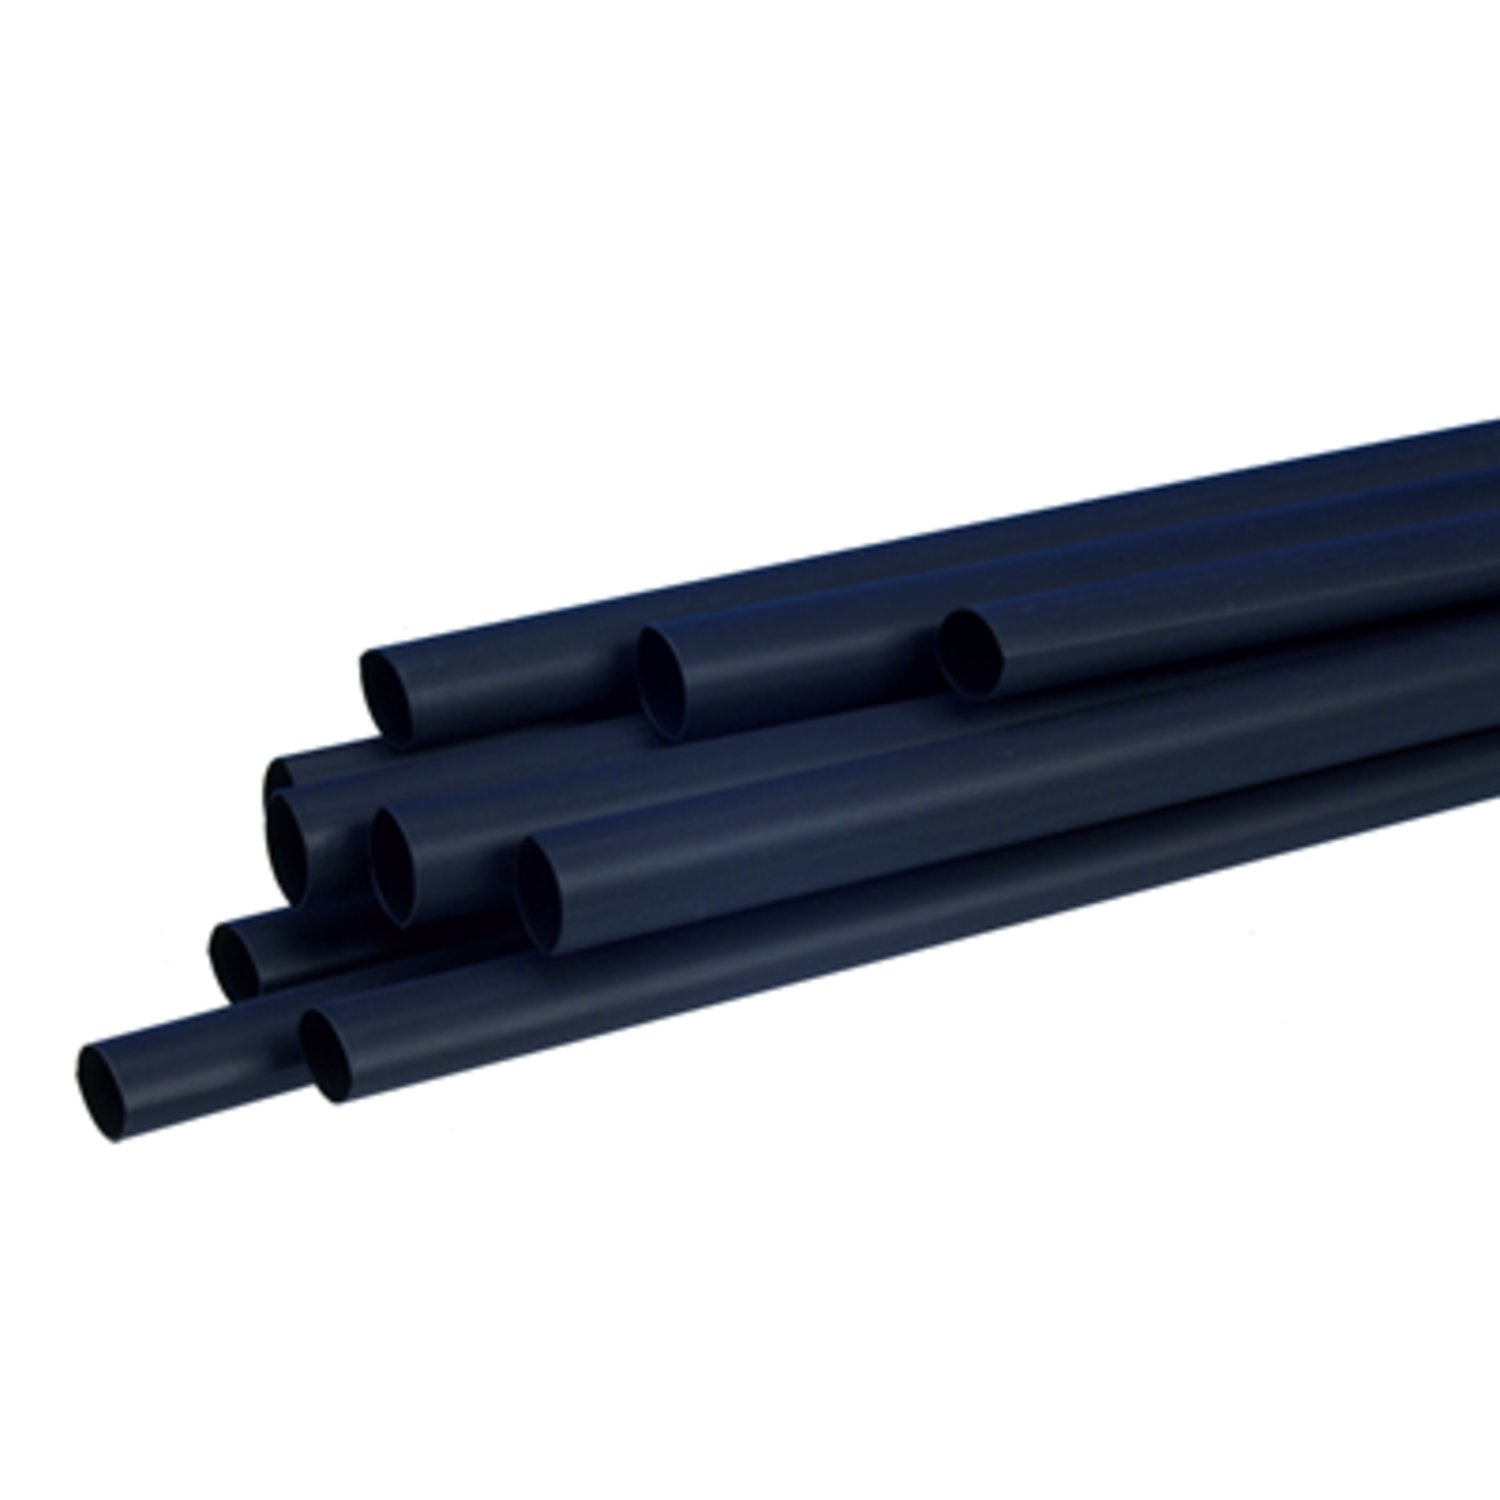 7000099192 - 3M SFTW-203 Heat Shrink Tubing Polyolefin, Black, 1.5/0.5 mm, 1.22 m
Piece